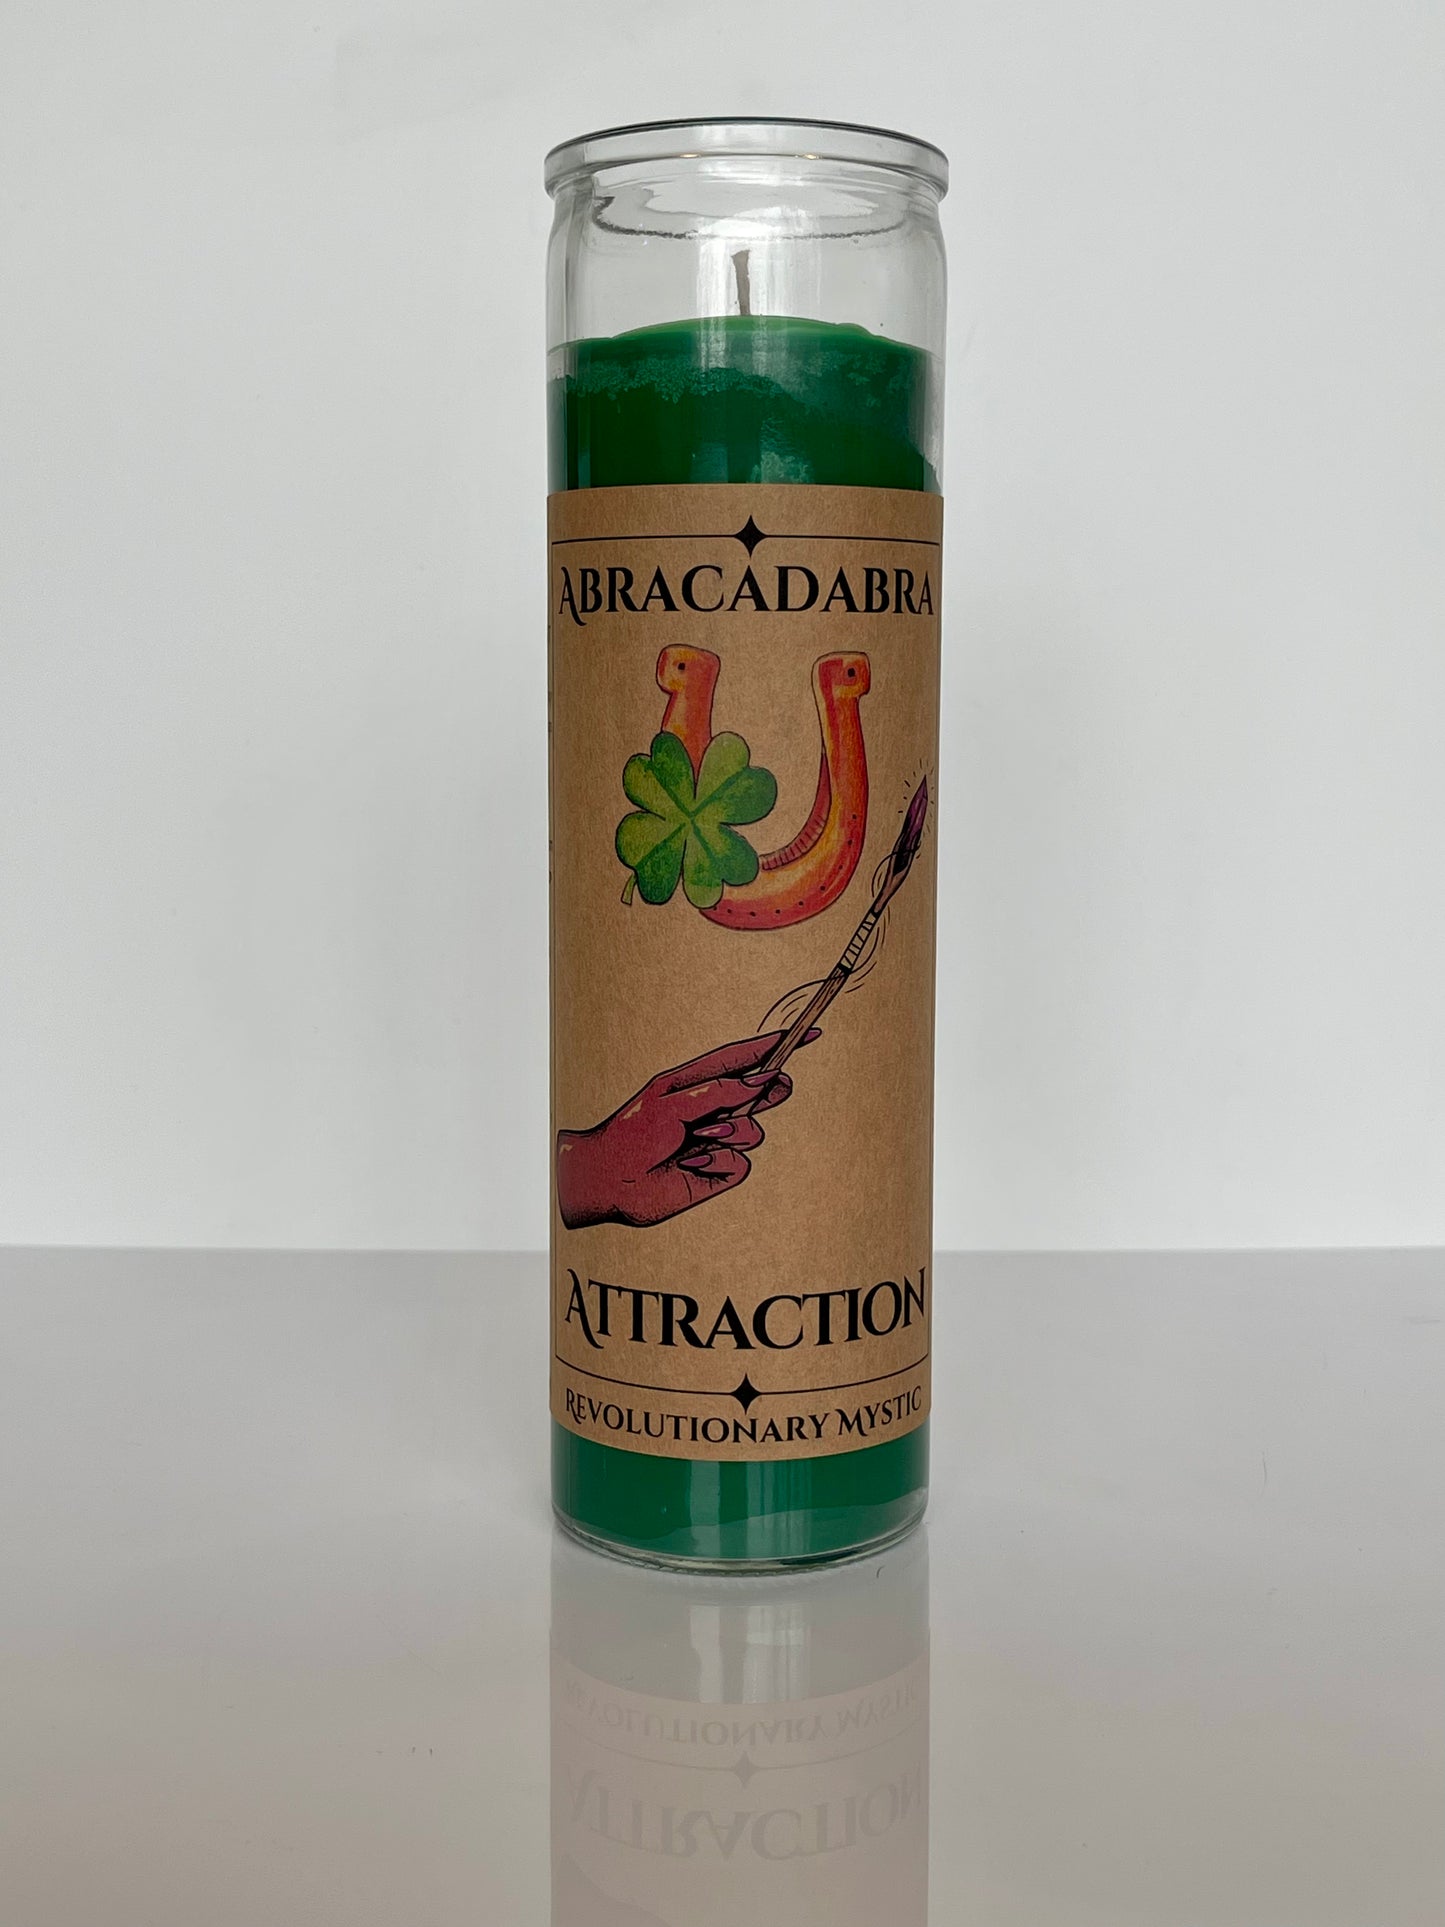 Abracadabra Attraction Candle - Revolutionary Mystic